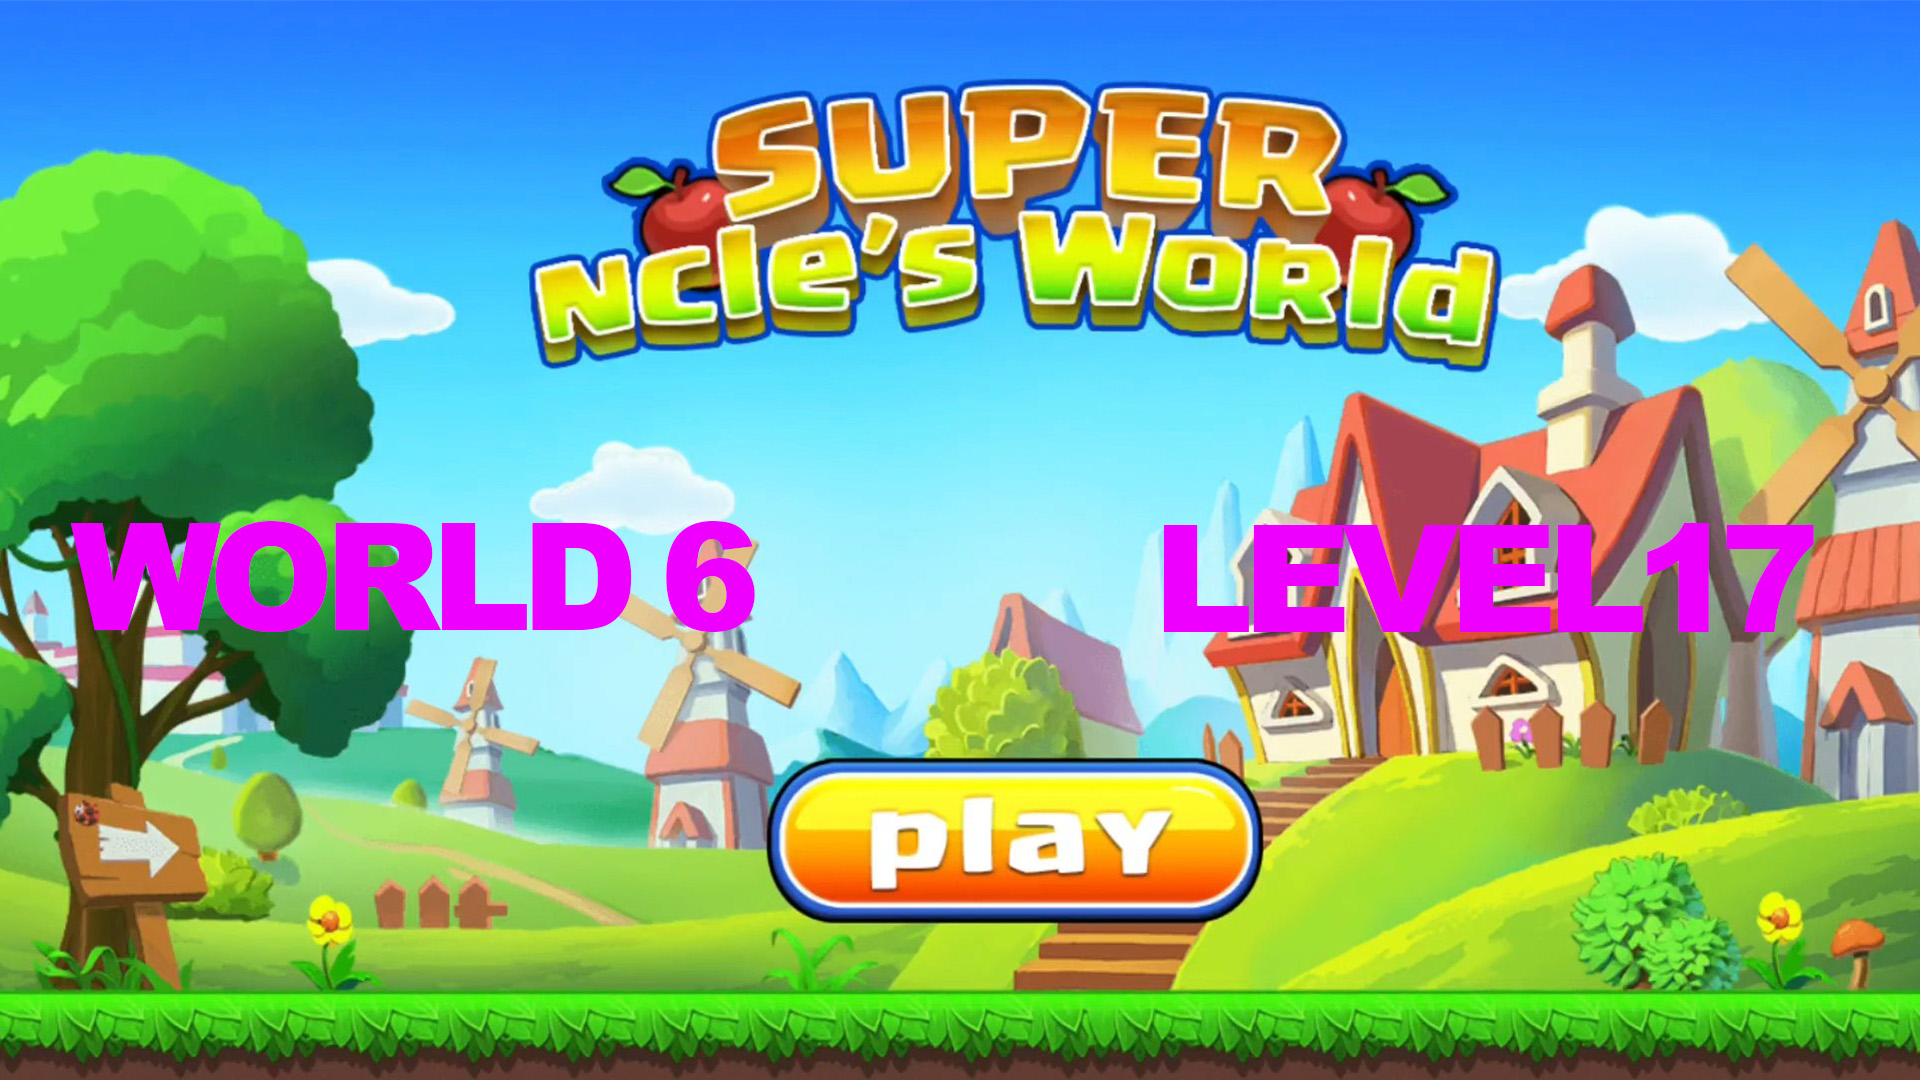 Super ncle's  World 6. Level 17.